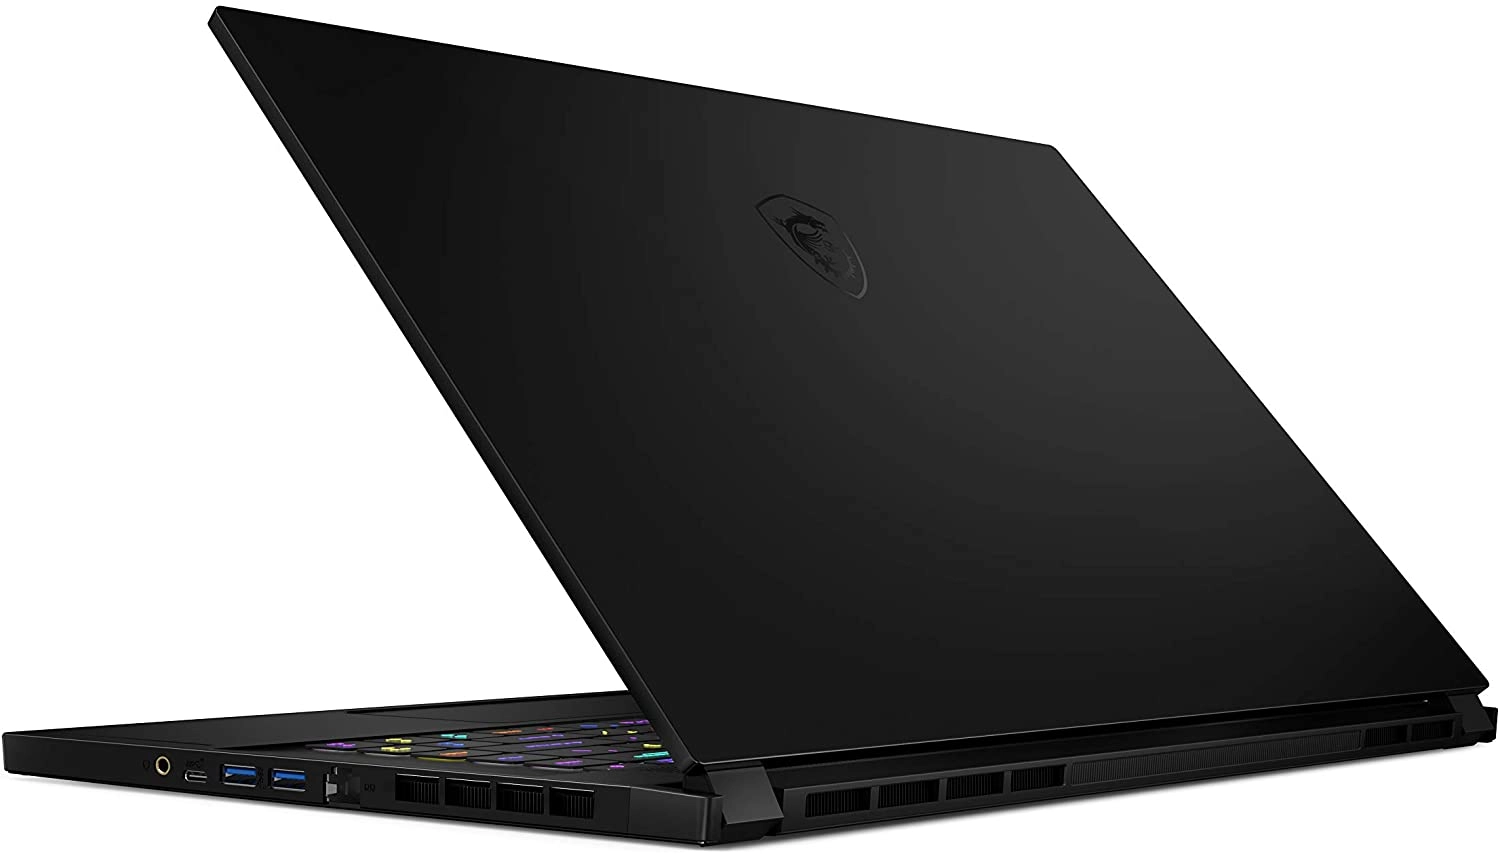 MSI GS66 Stealth 10UG-035ES laptop image